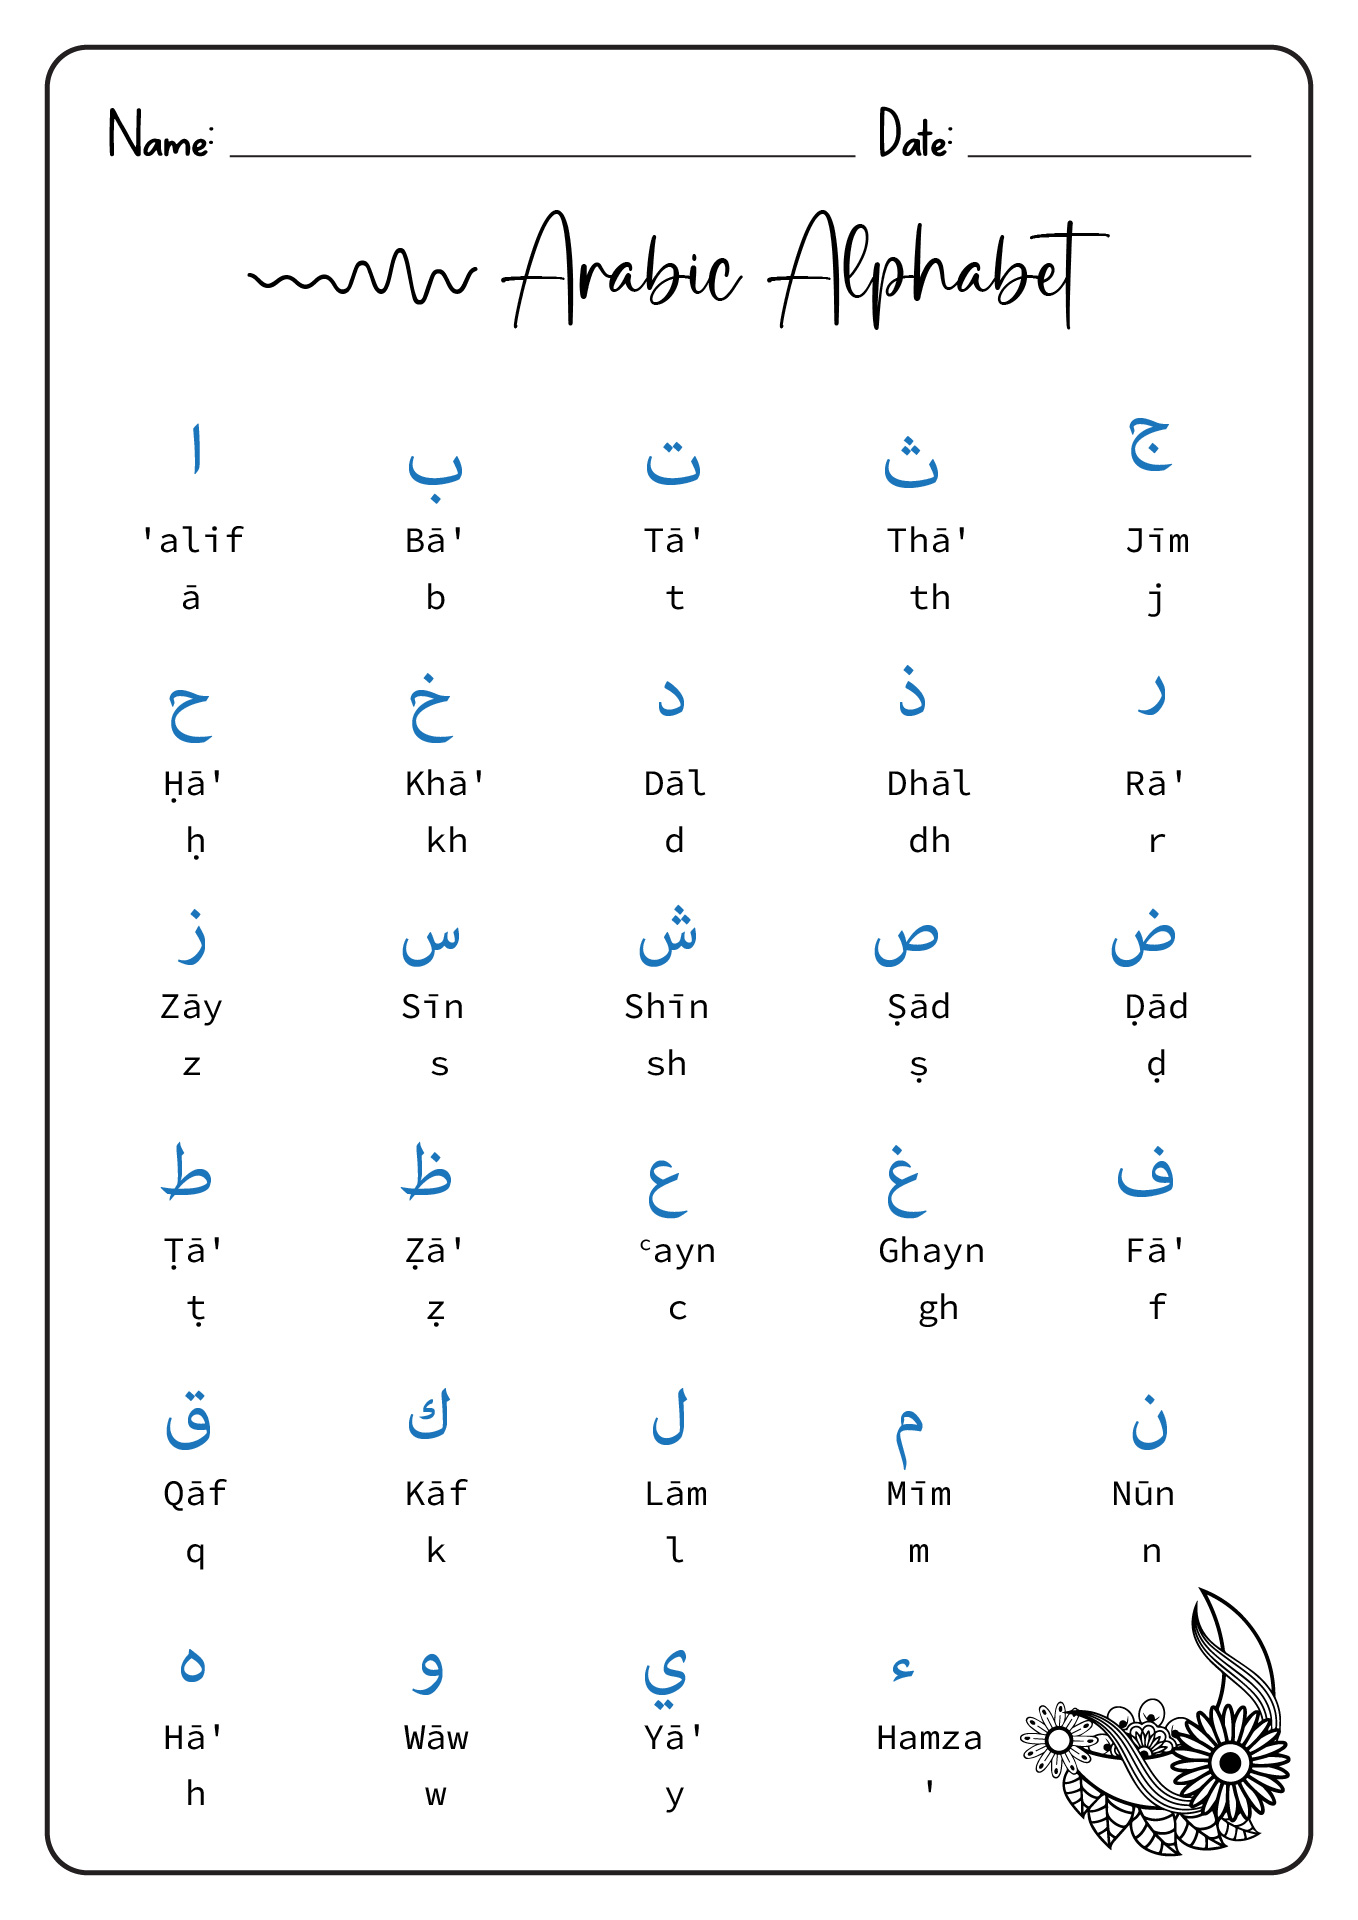 Arabic Alphabet Translation